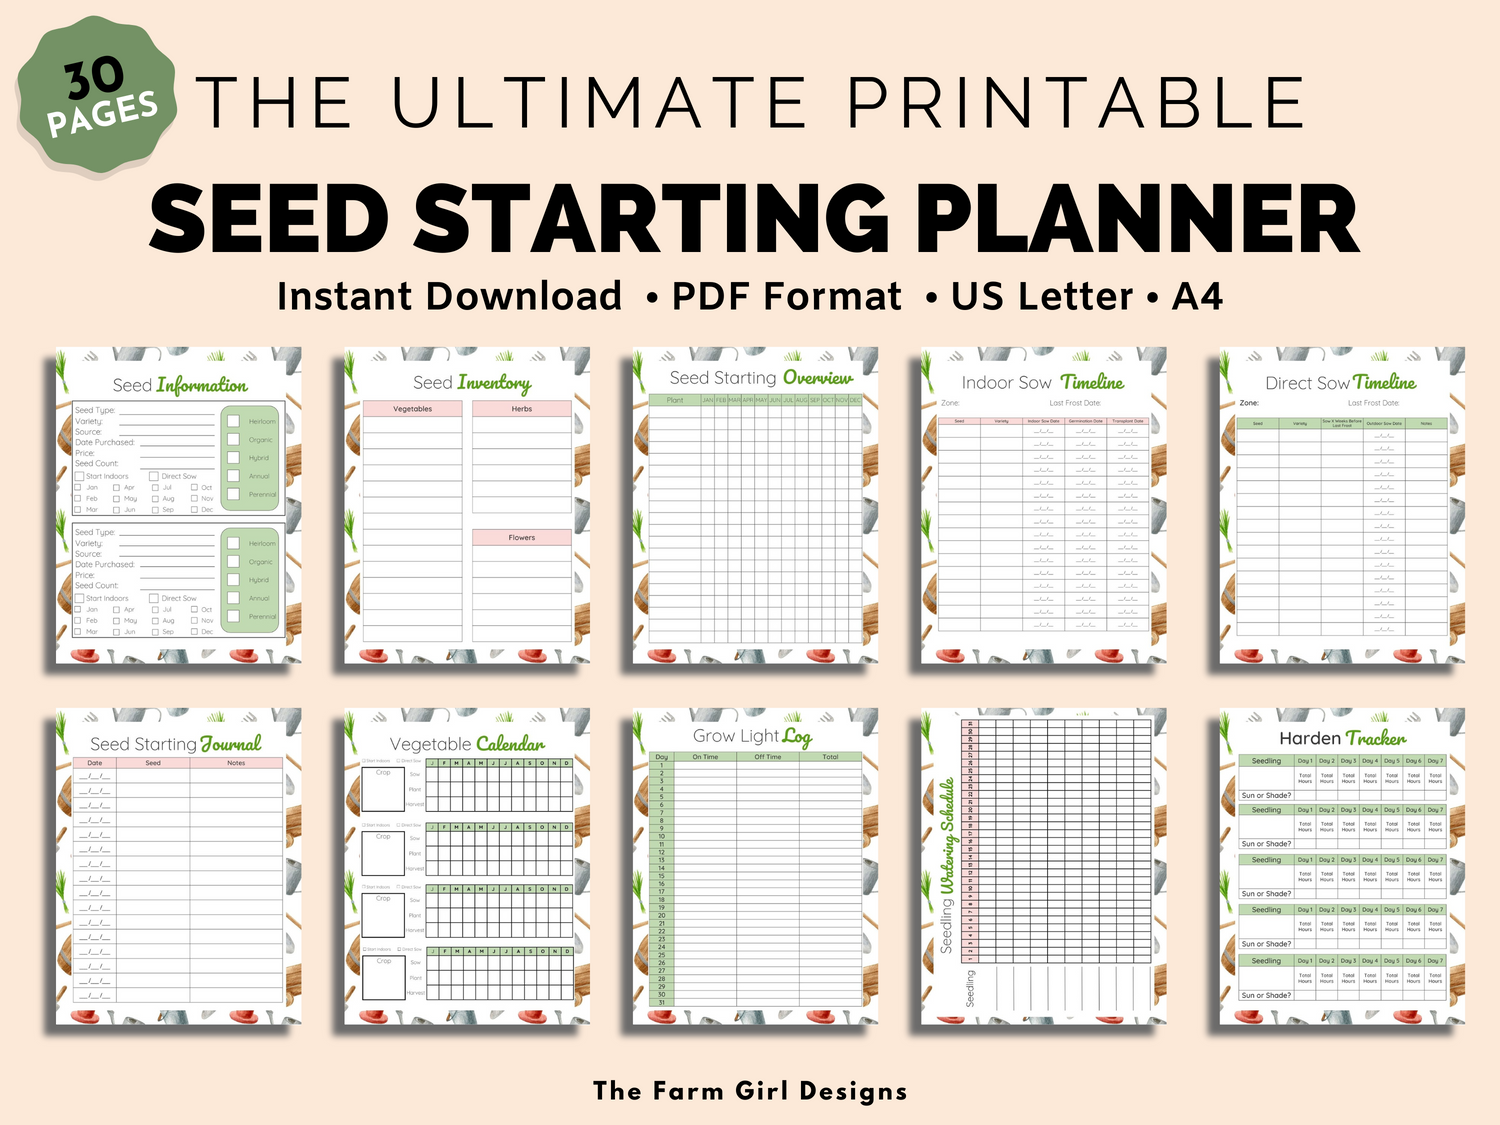 Seed Starting Garden Planner